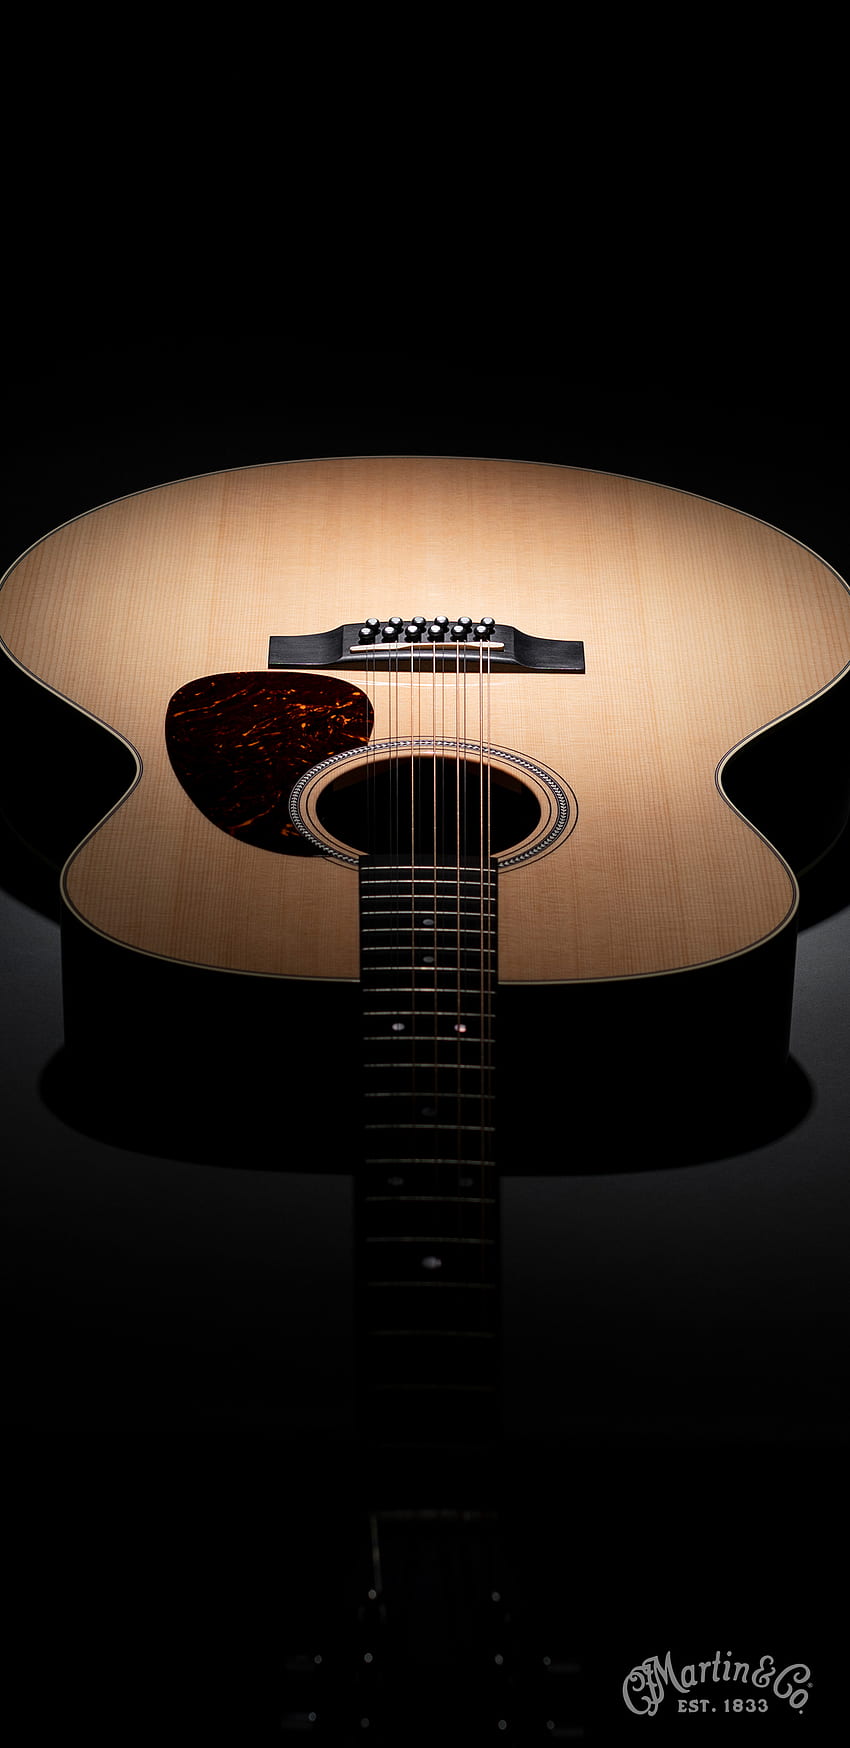 Latar Belakang Model Baru NAMM, Martin Acoustic Guitar wallpaper ponsel HD